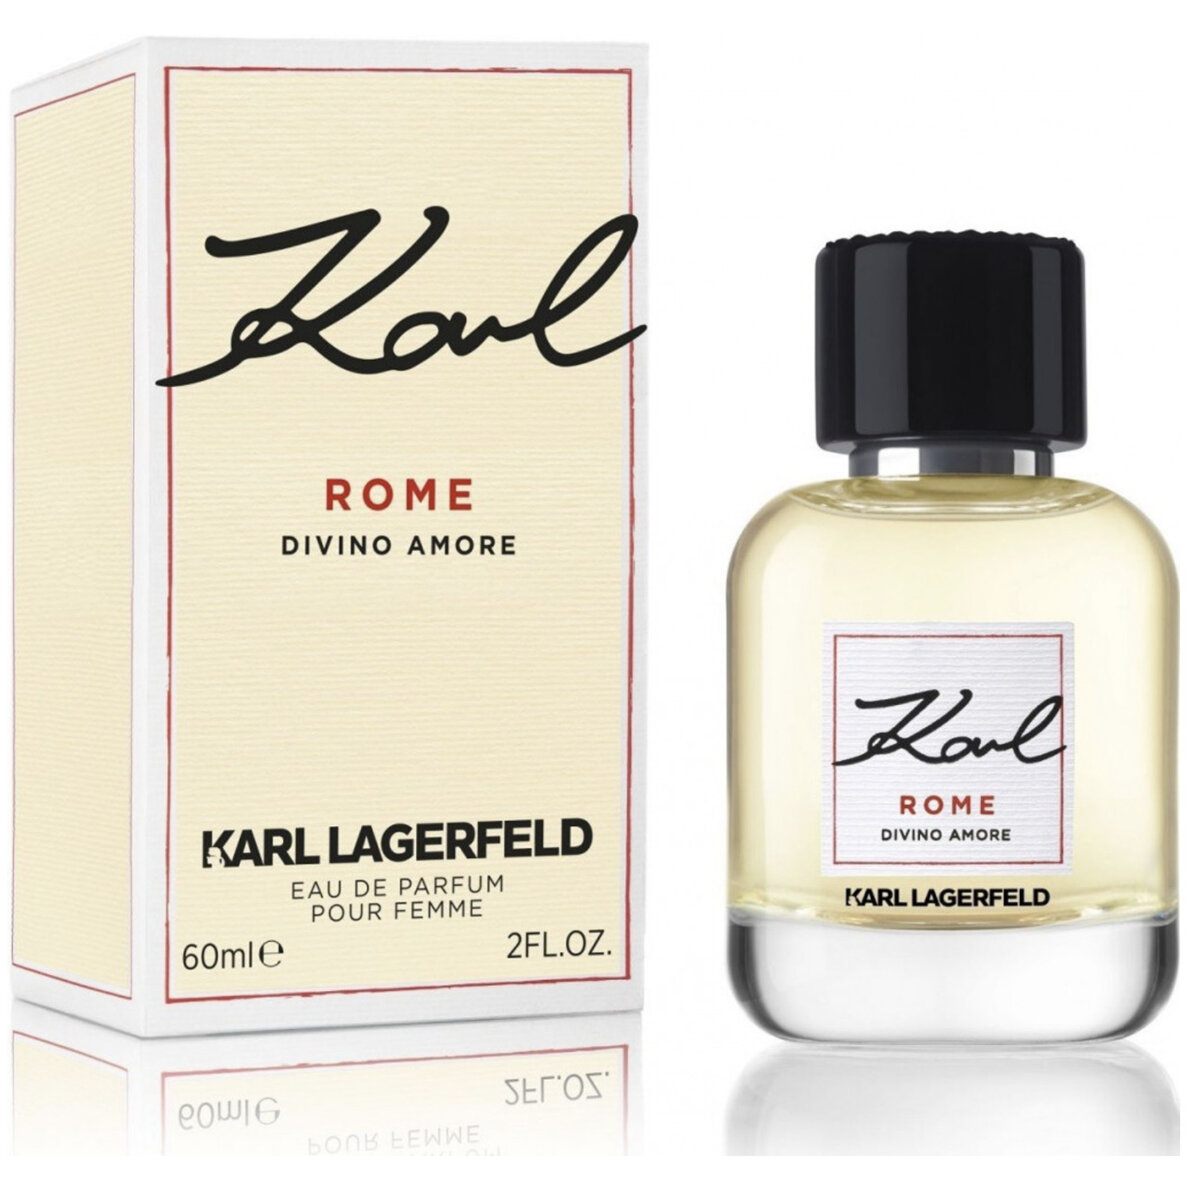 Karl Lagerfeld Rome Divino Amore EDP 60ml